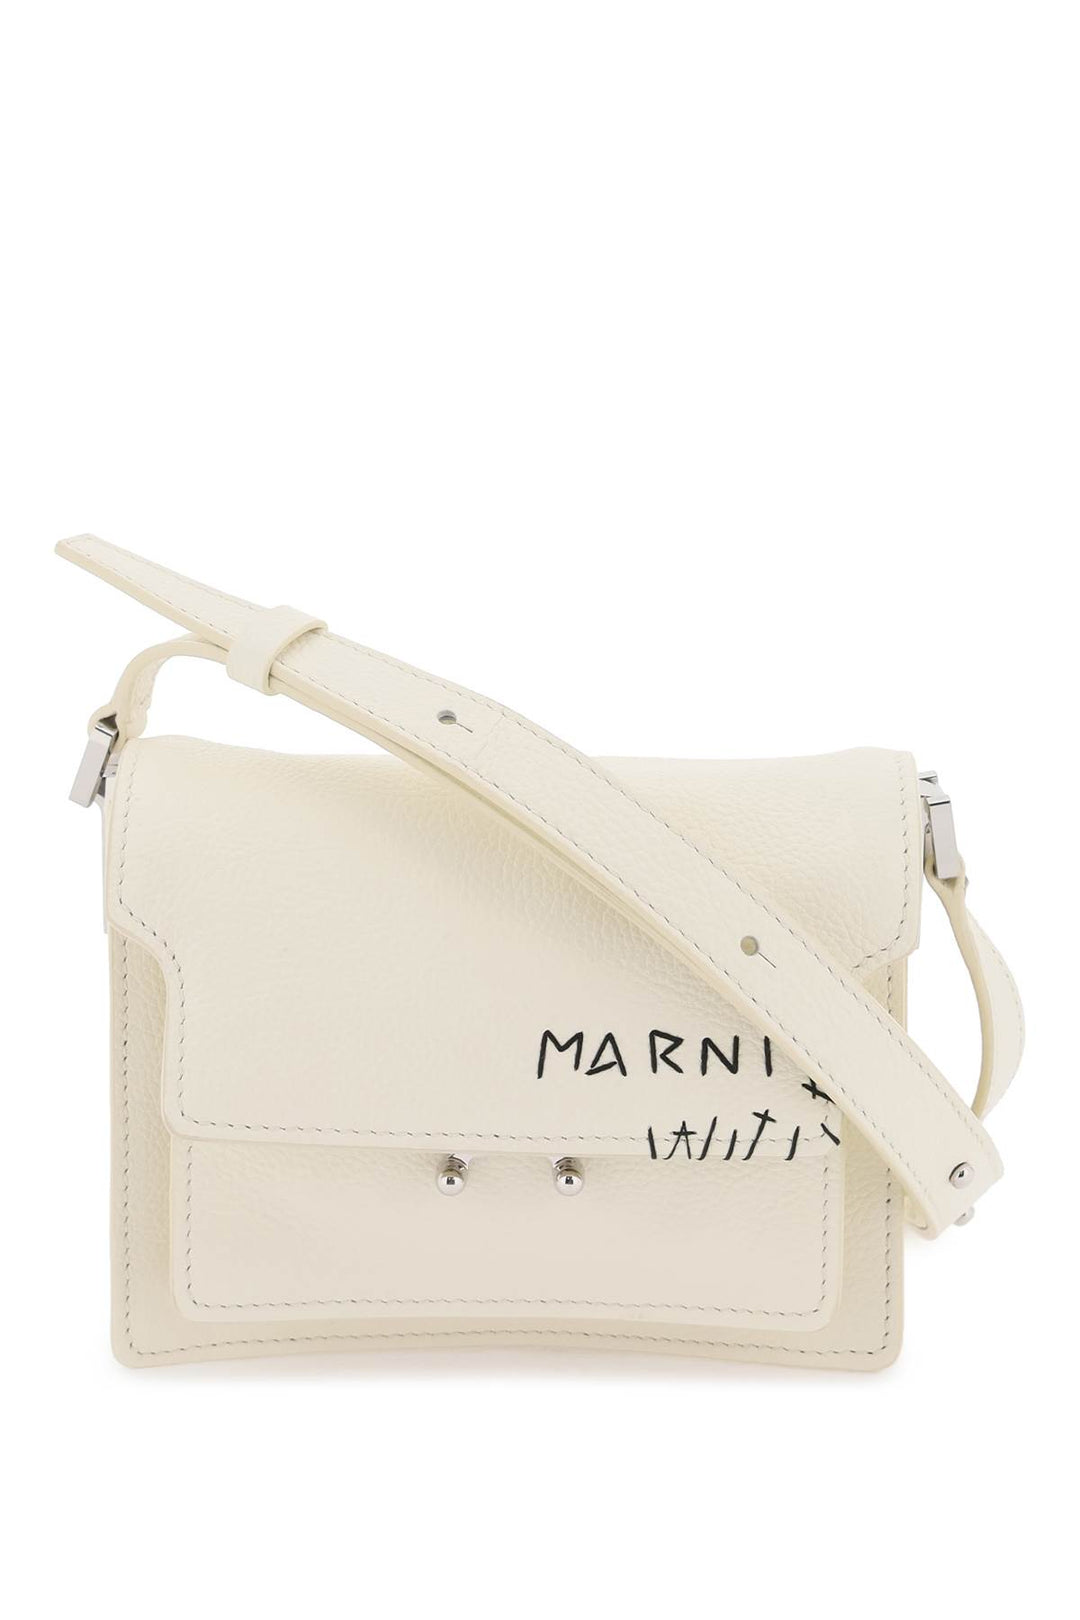 Marni Mini Soft Trunk Shoulder Bag   Bianco